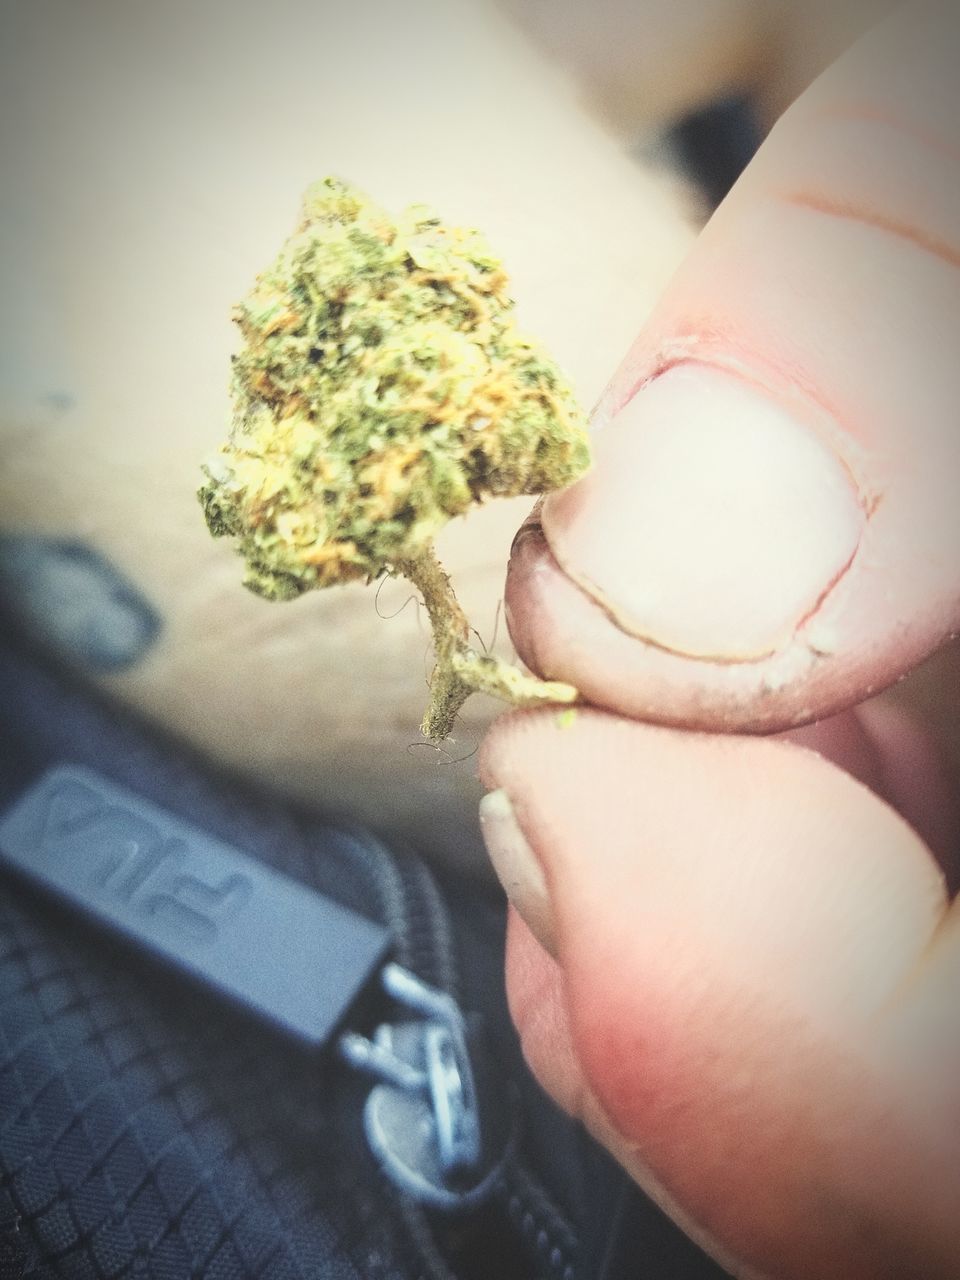 Marijuana - Herbal Cannabis Weed Stoned Stonergirl Cannabis Nugget Drugs Addiction Human Hand Holding Close-up